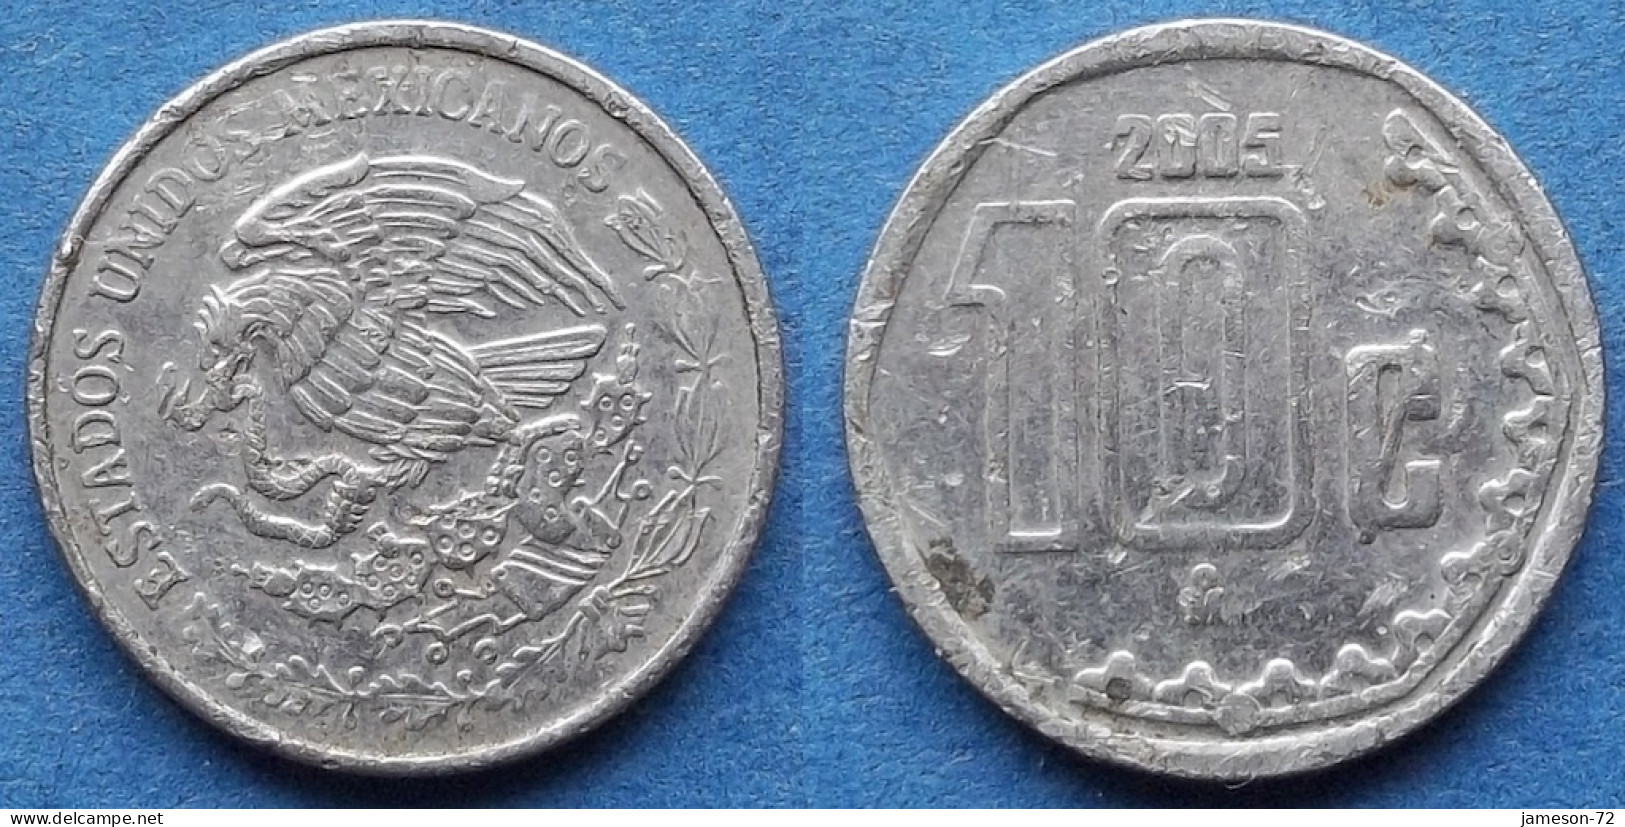 MEXICO - 10 Centavos 2005 Mo KM# 547 Estados Unidos Mexicanos Monetary Reform (1993) - Edelweiss Coins - Messico